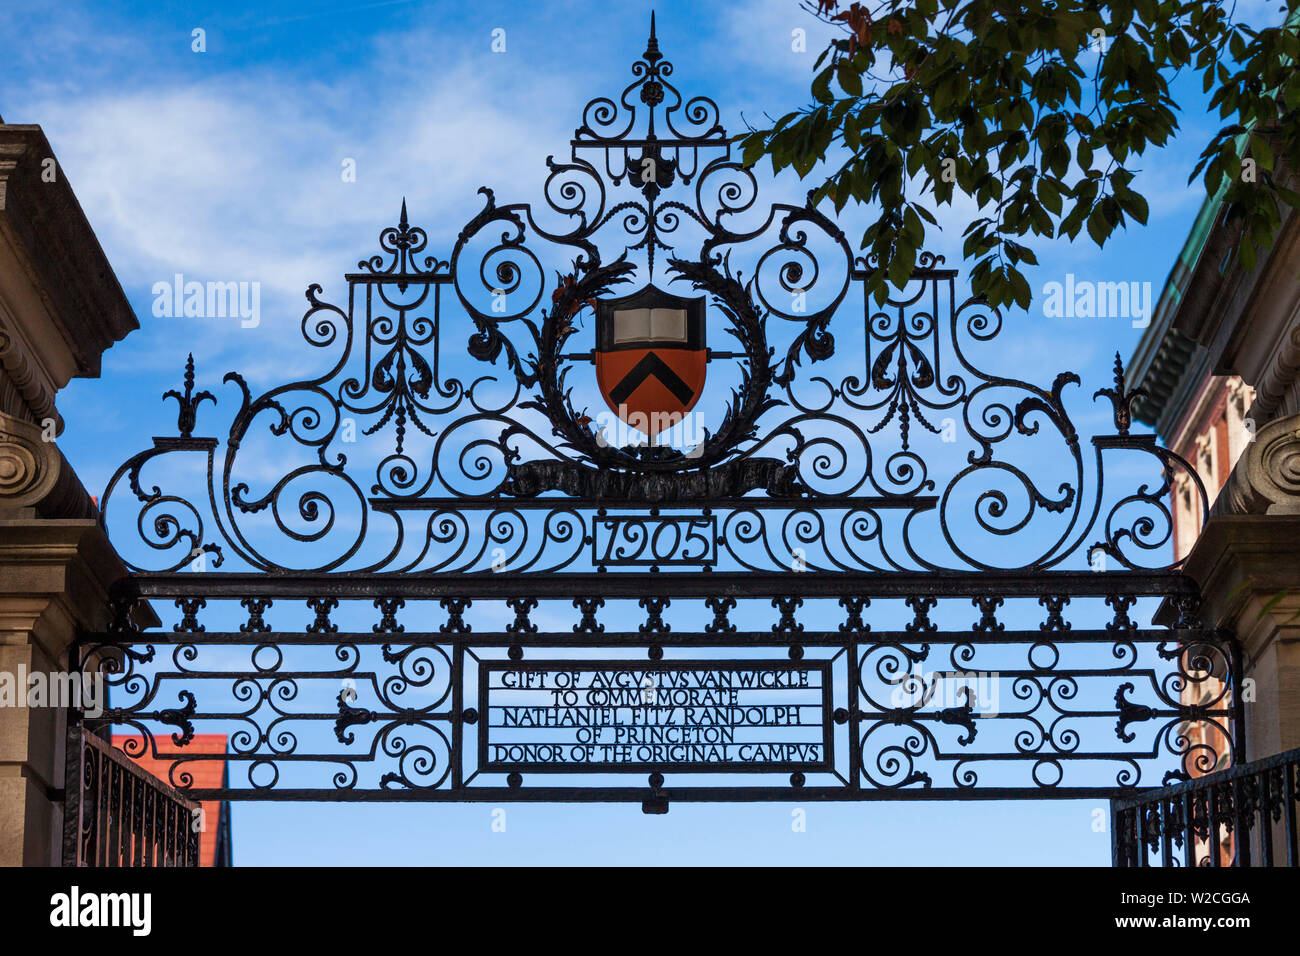 USA, New Jersey, Princeton, Princeton University, campus gate detail Stock Photo